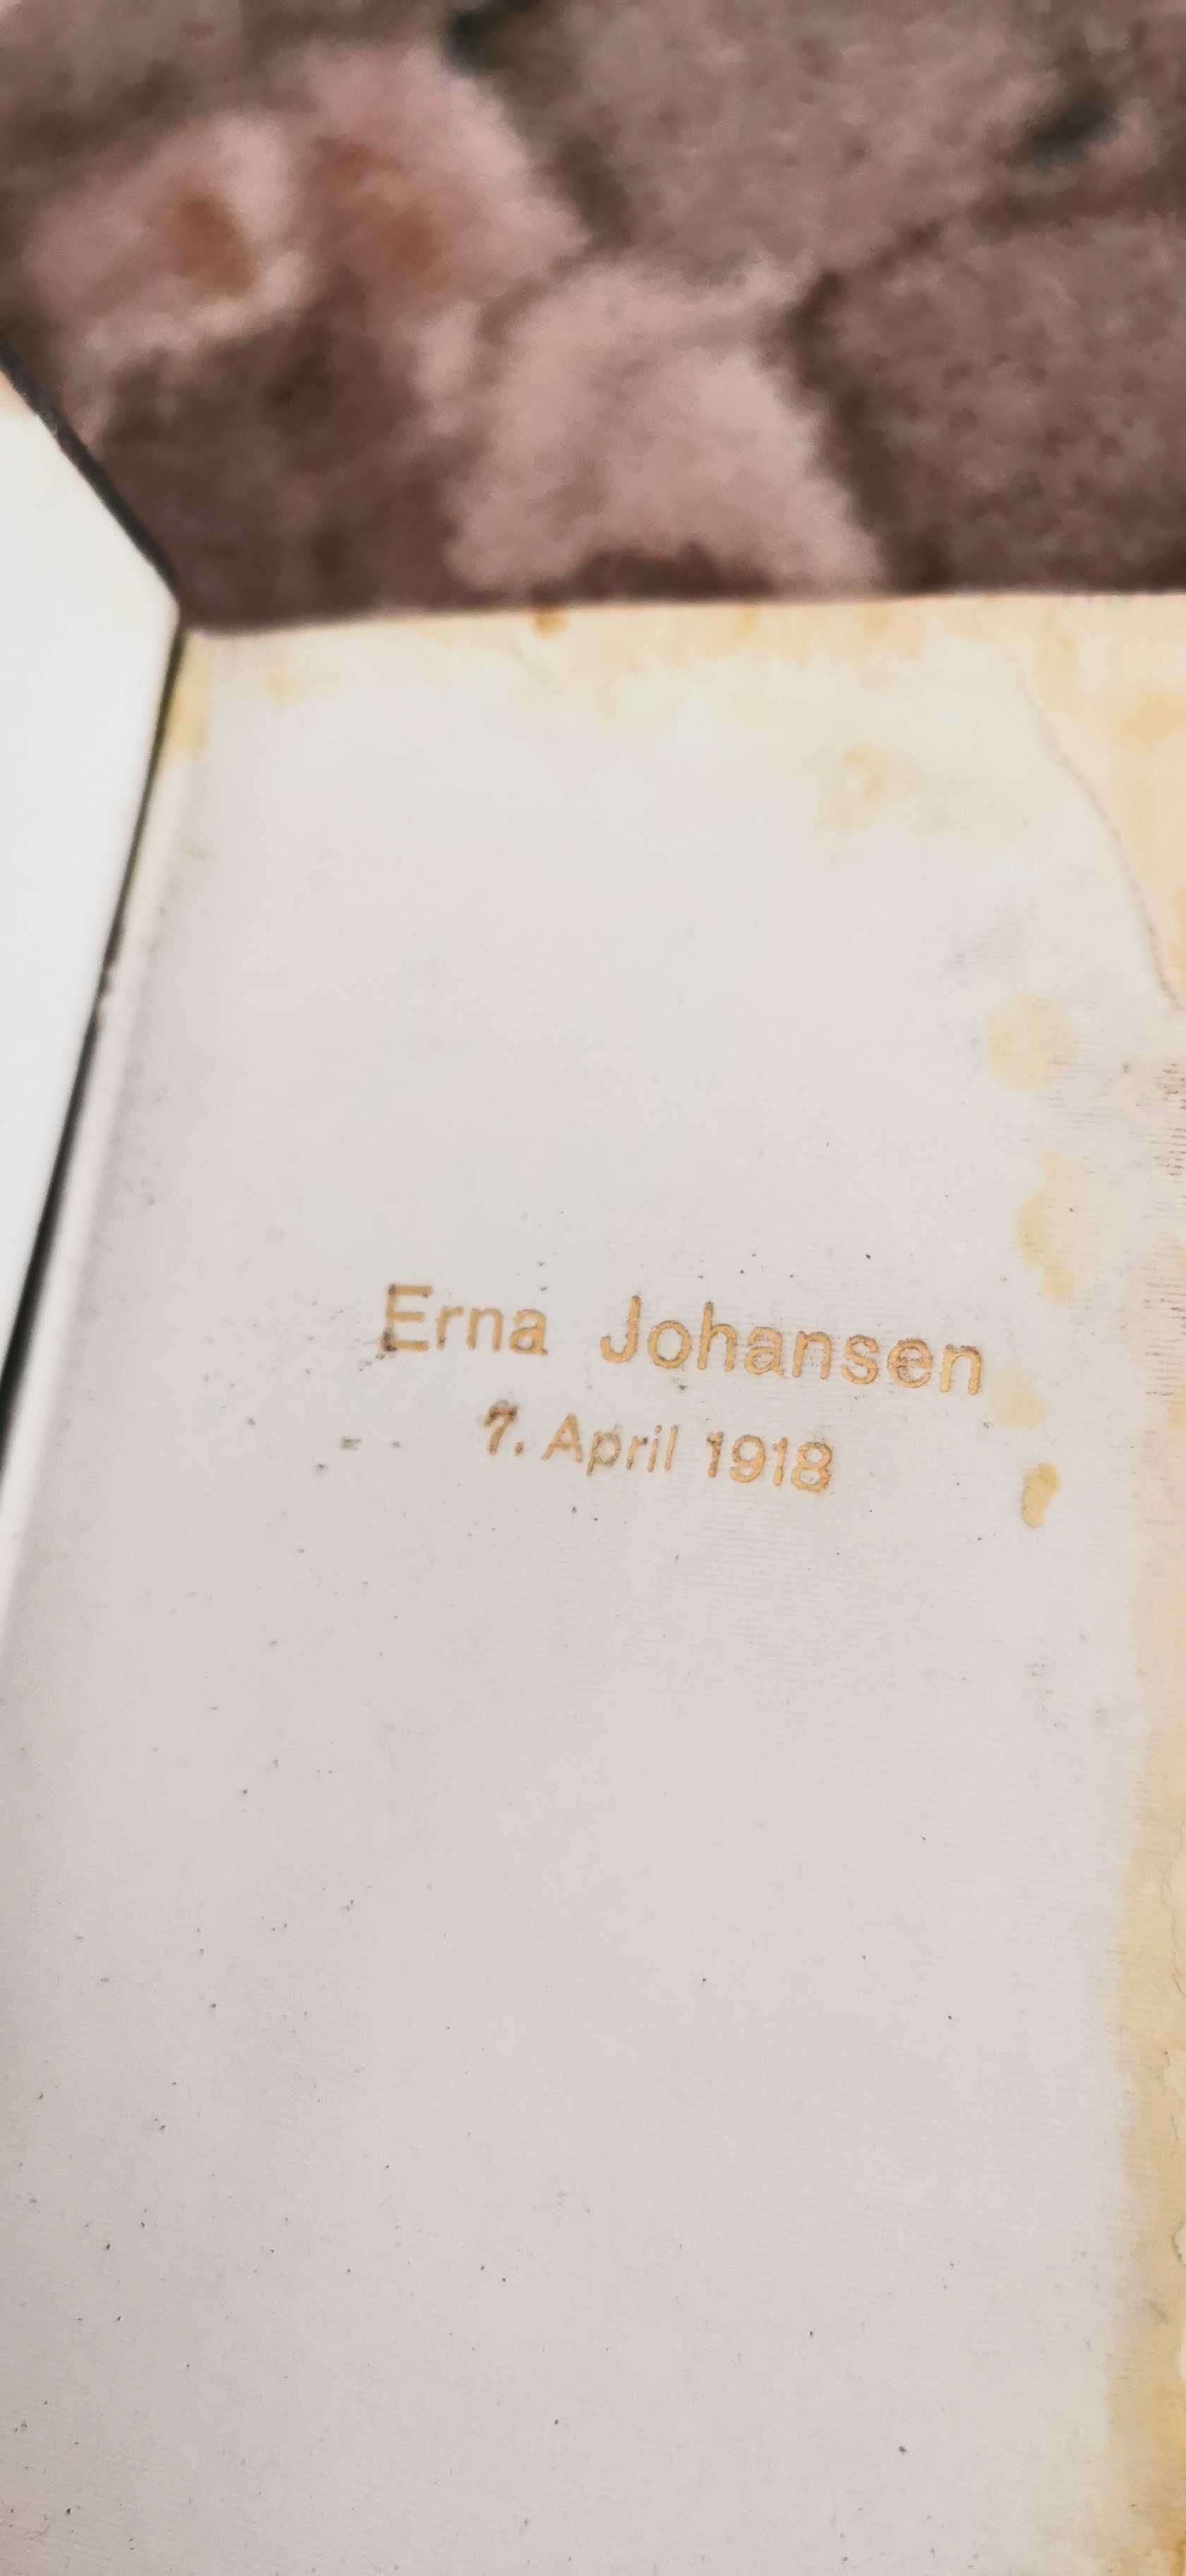 carte psalmebog erna johansen 7 aprilie 1918 statuie lemn teme religie